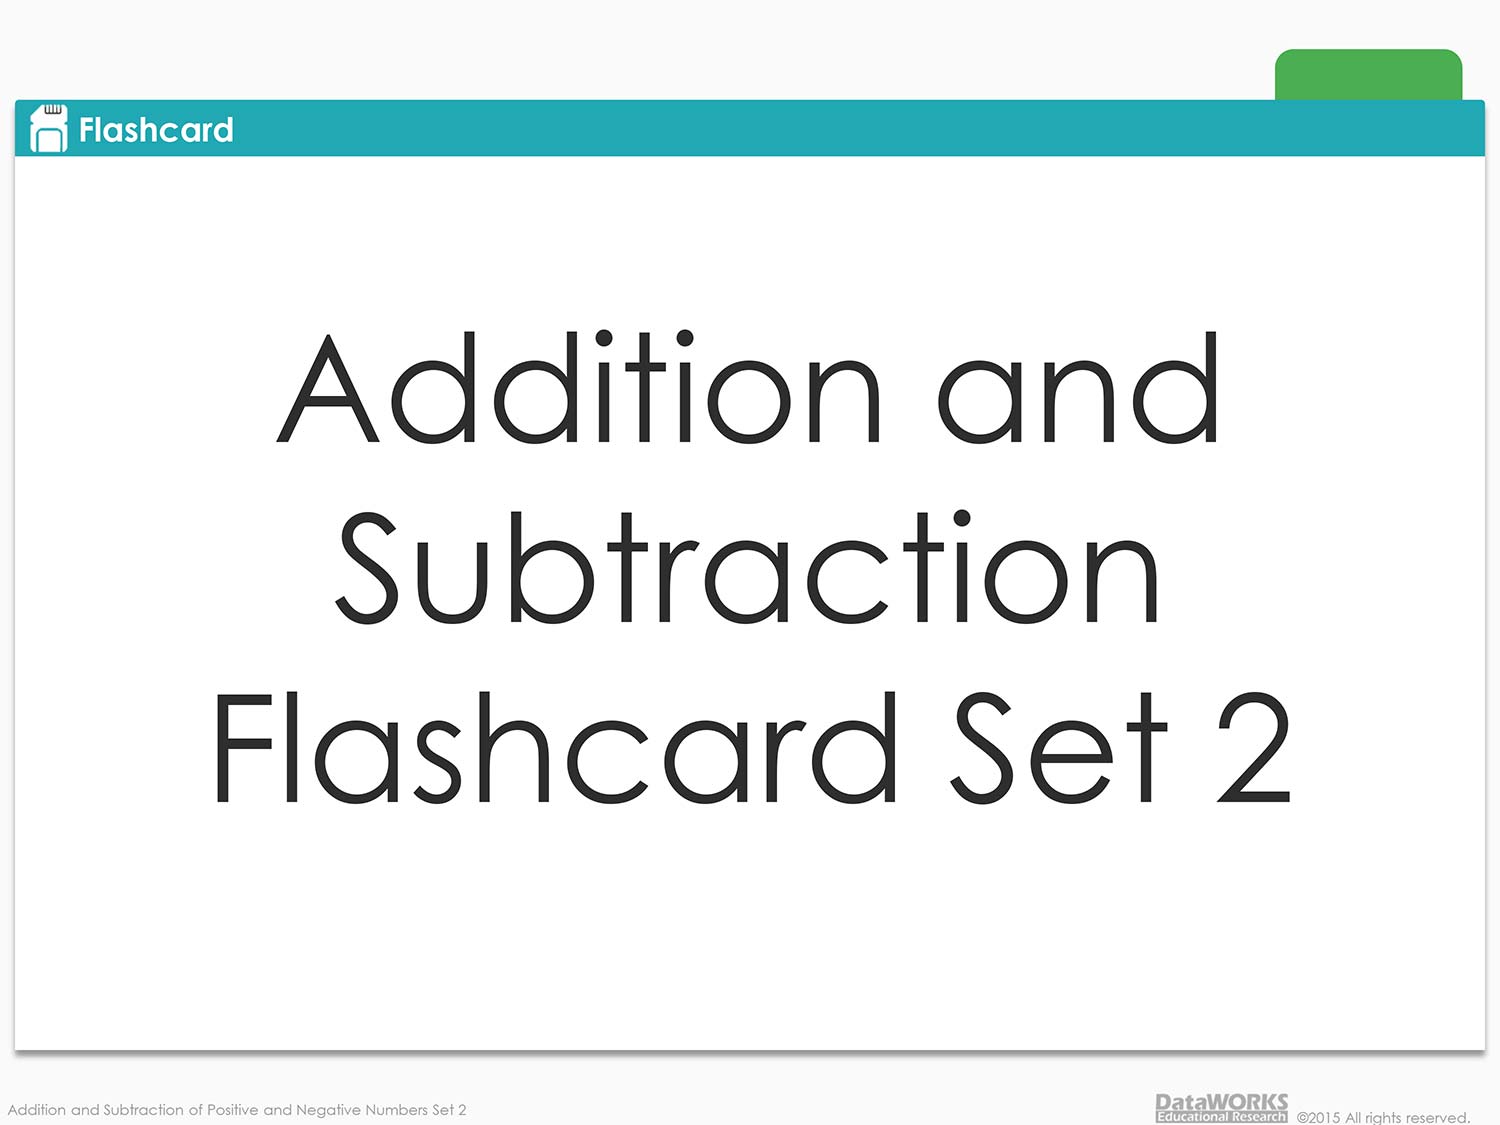 addition-subtraction